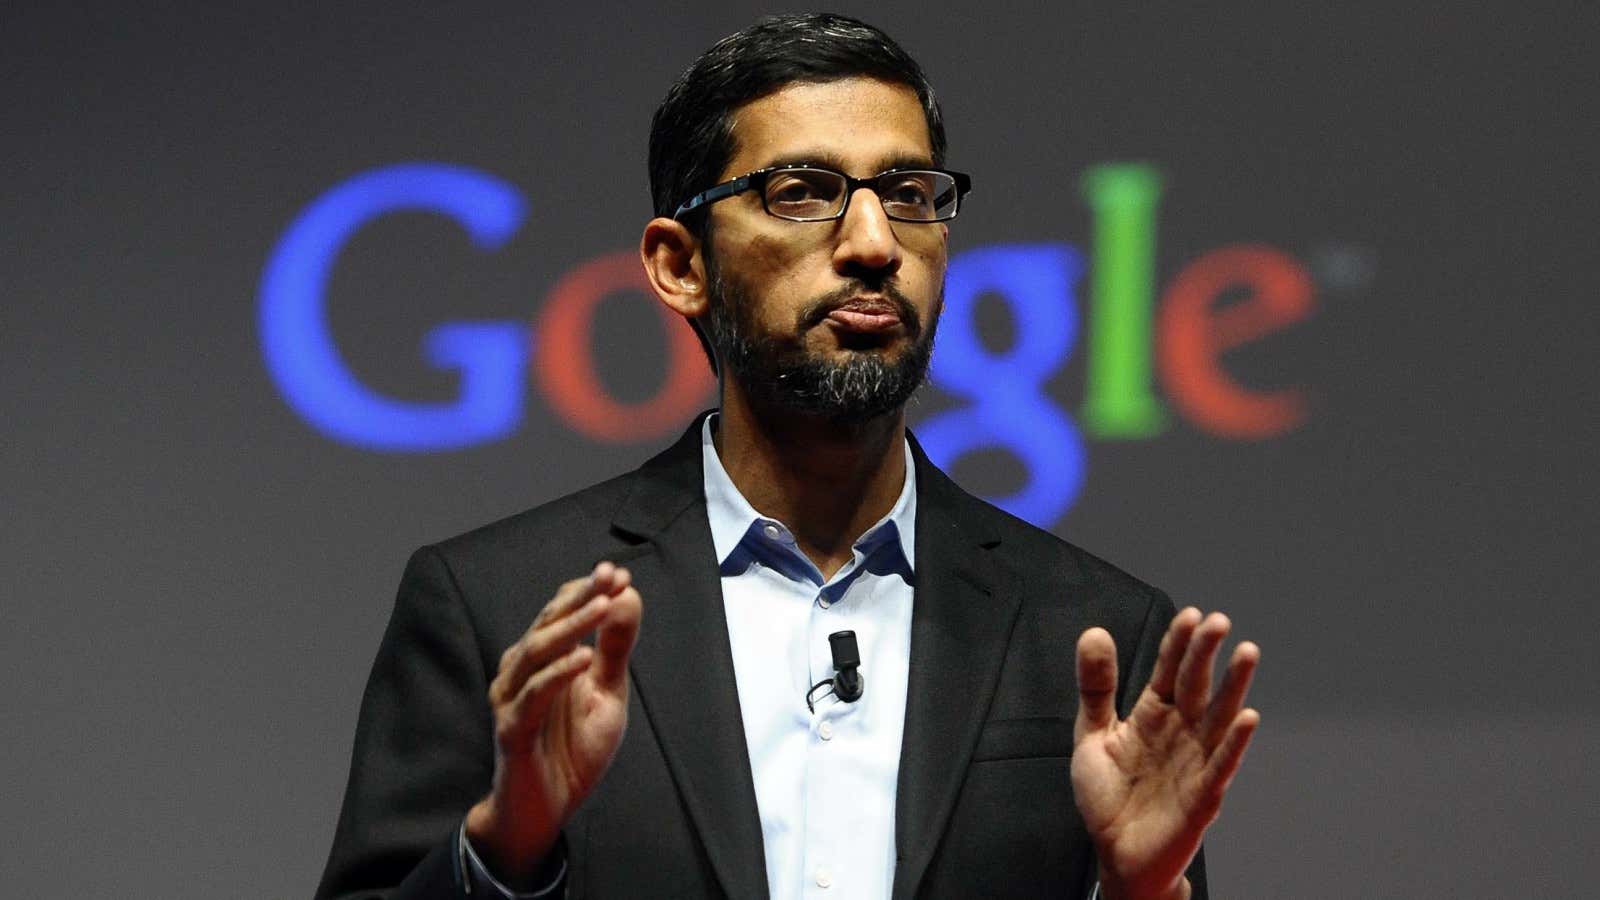 Sundar Pichai, Google’s Android head, says Google+ is splitting up.